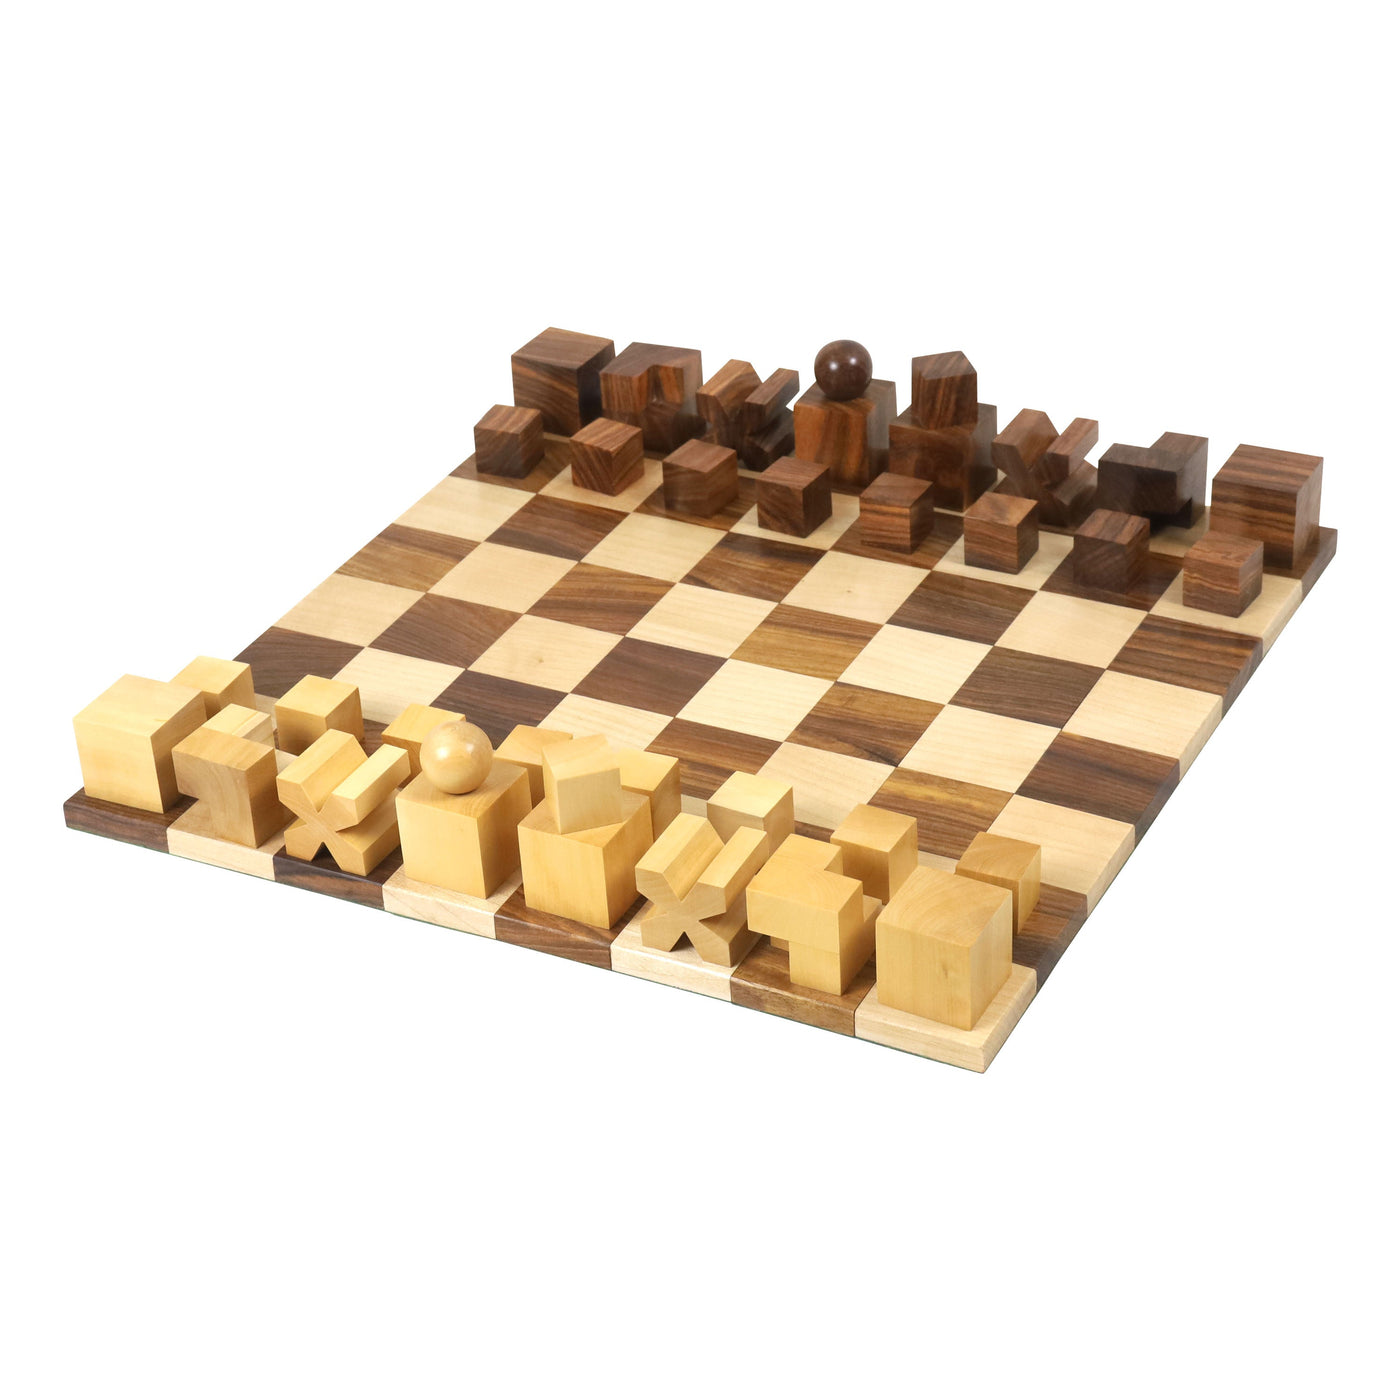 1923 Bauhaus Combo Chess Set | Wood Chess Sets | Luxury Chess Pieces 